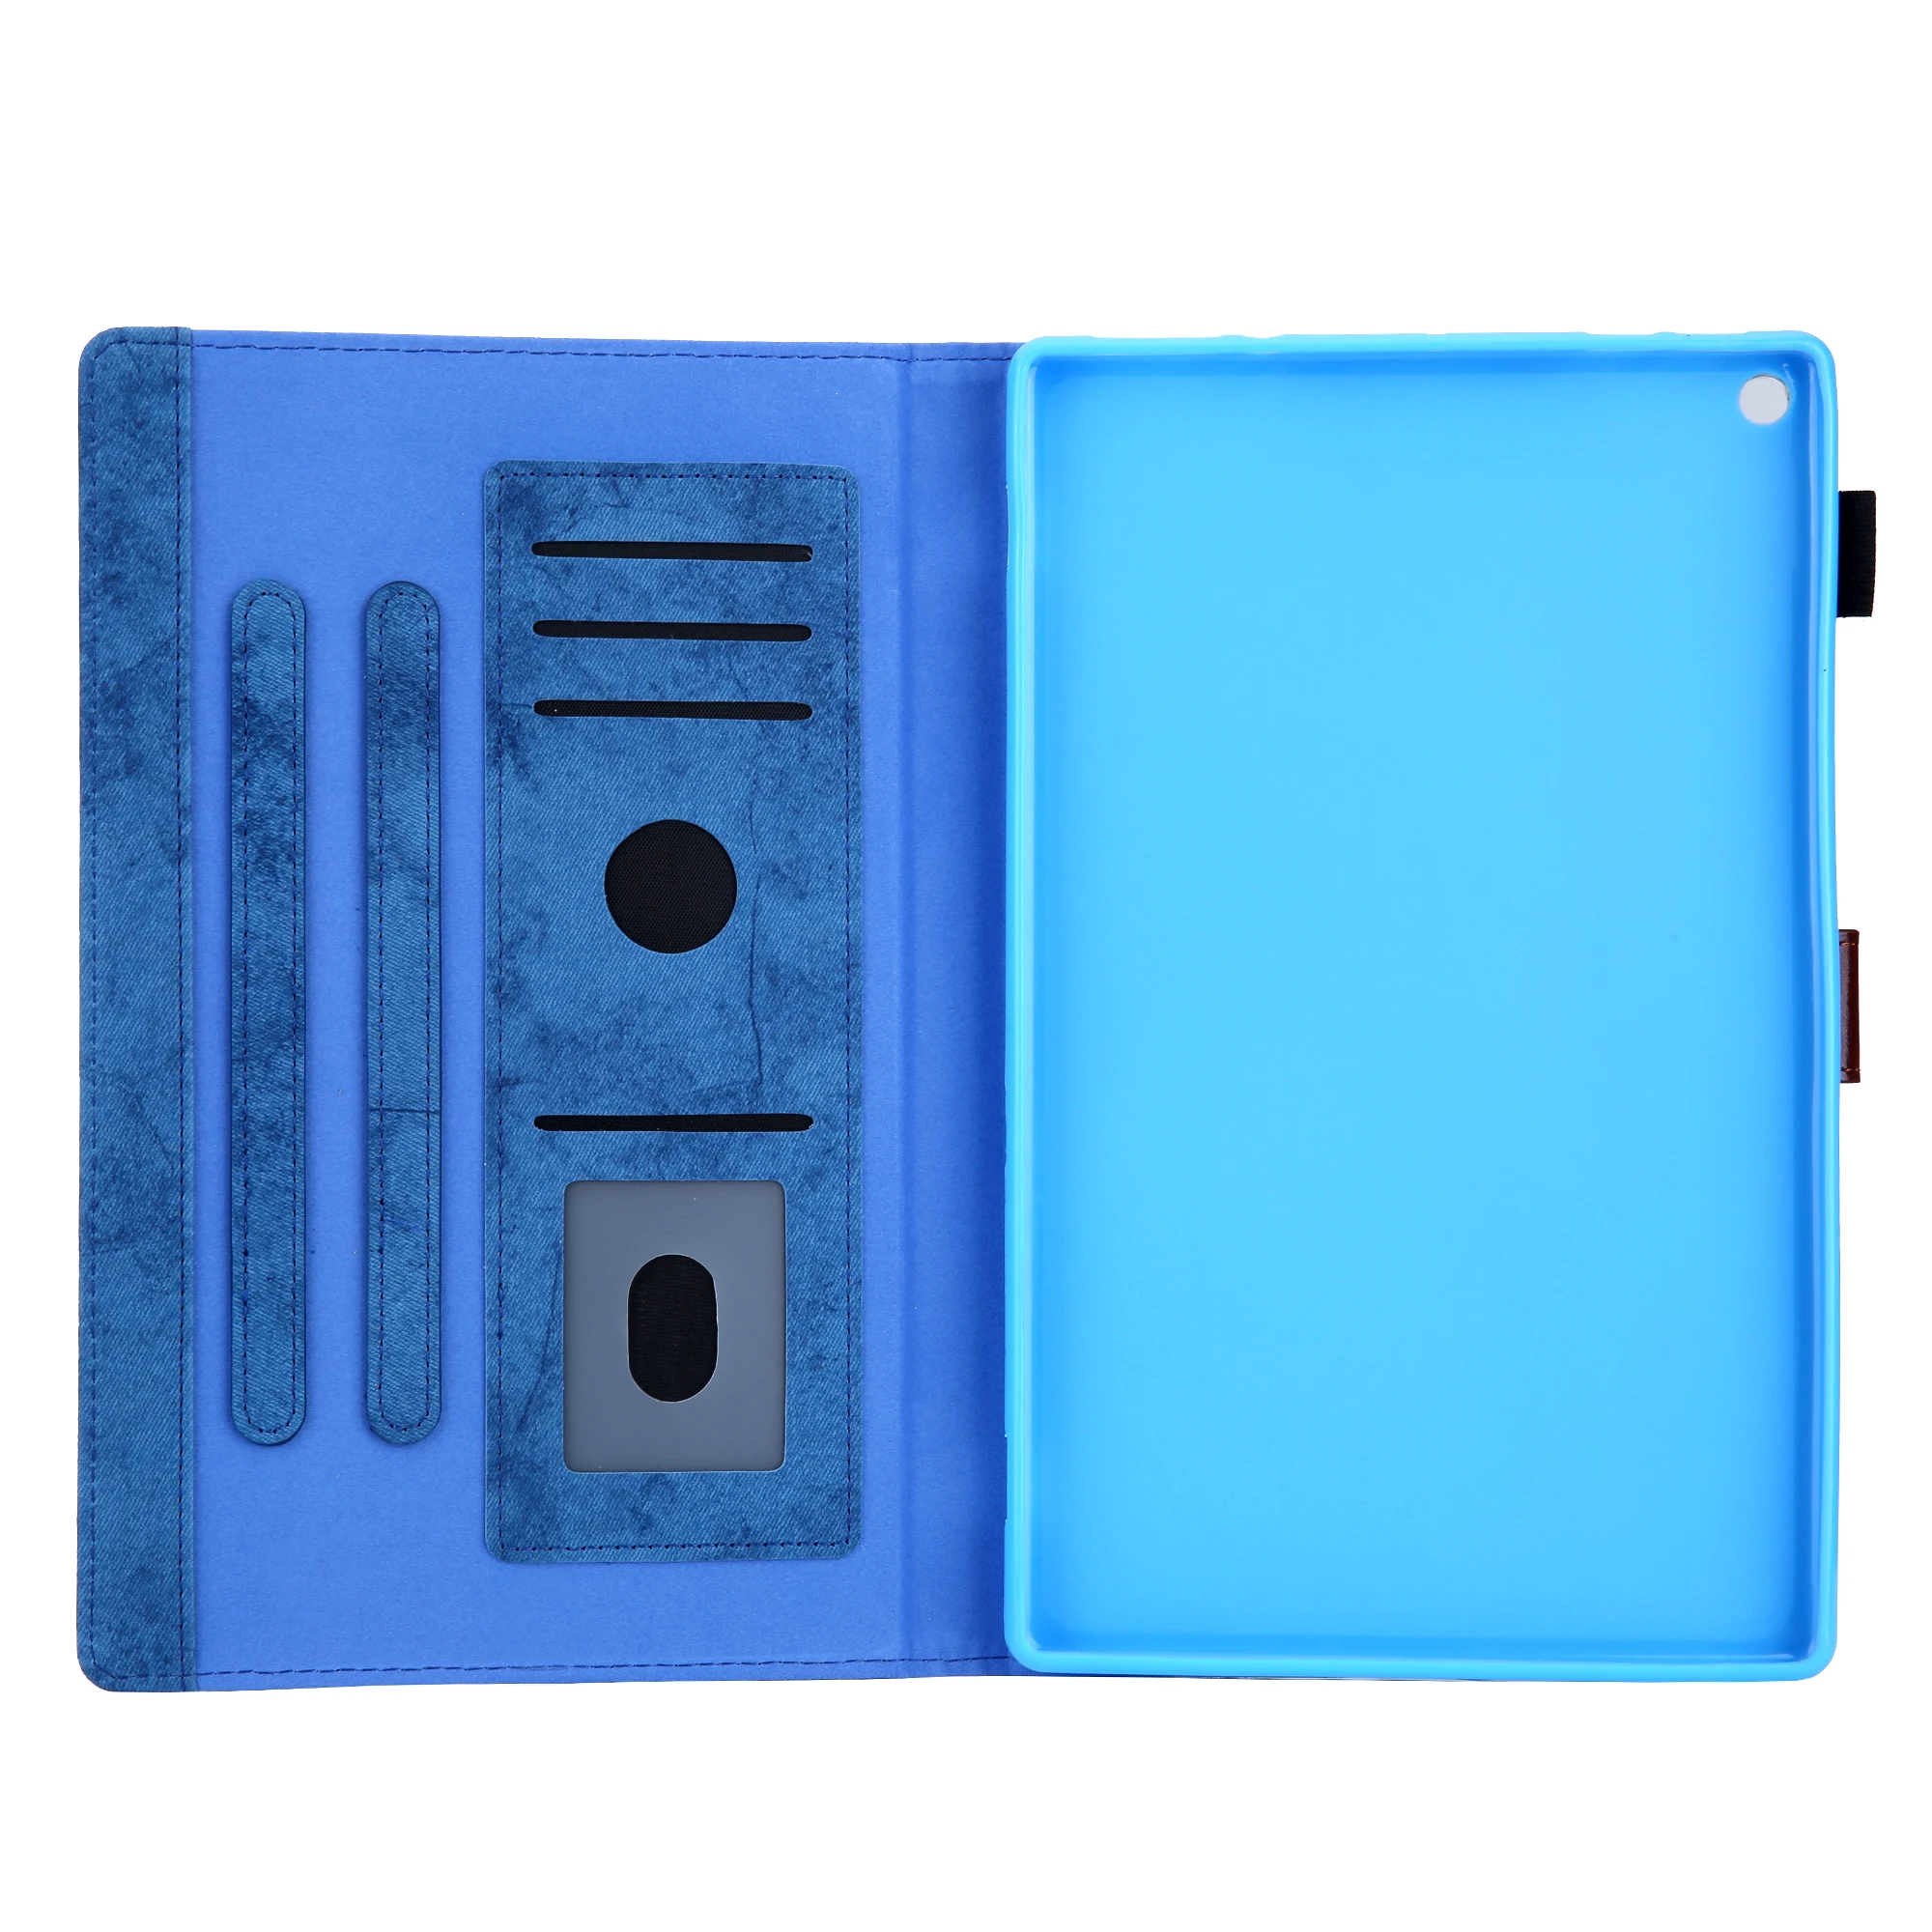 Кожаный чехол для Amazon Kindle Fire HD 10 Smart Cover Sleep Wake Tablet, защитный чехол для Kindle Fire HD 10, чехол